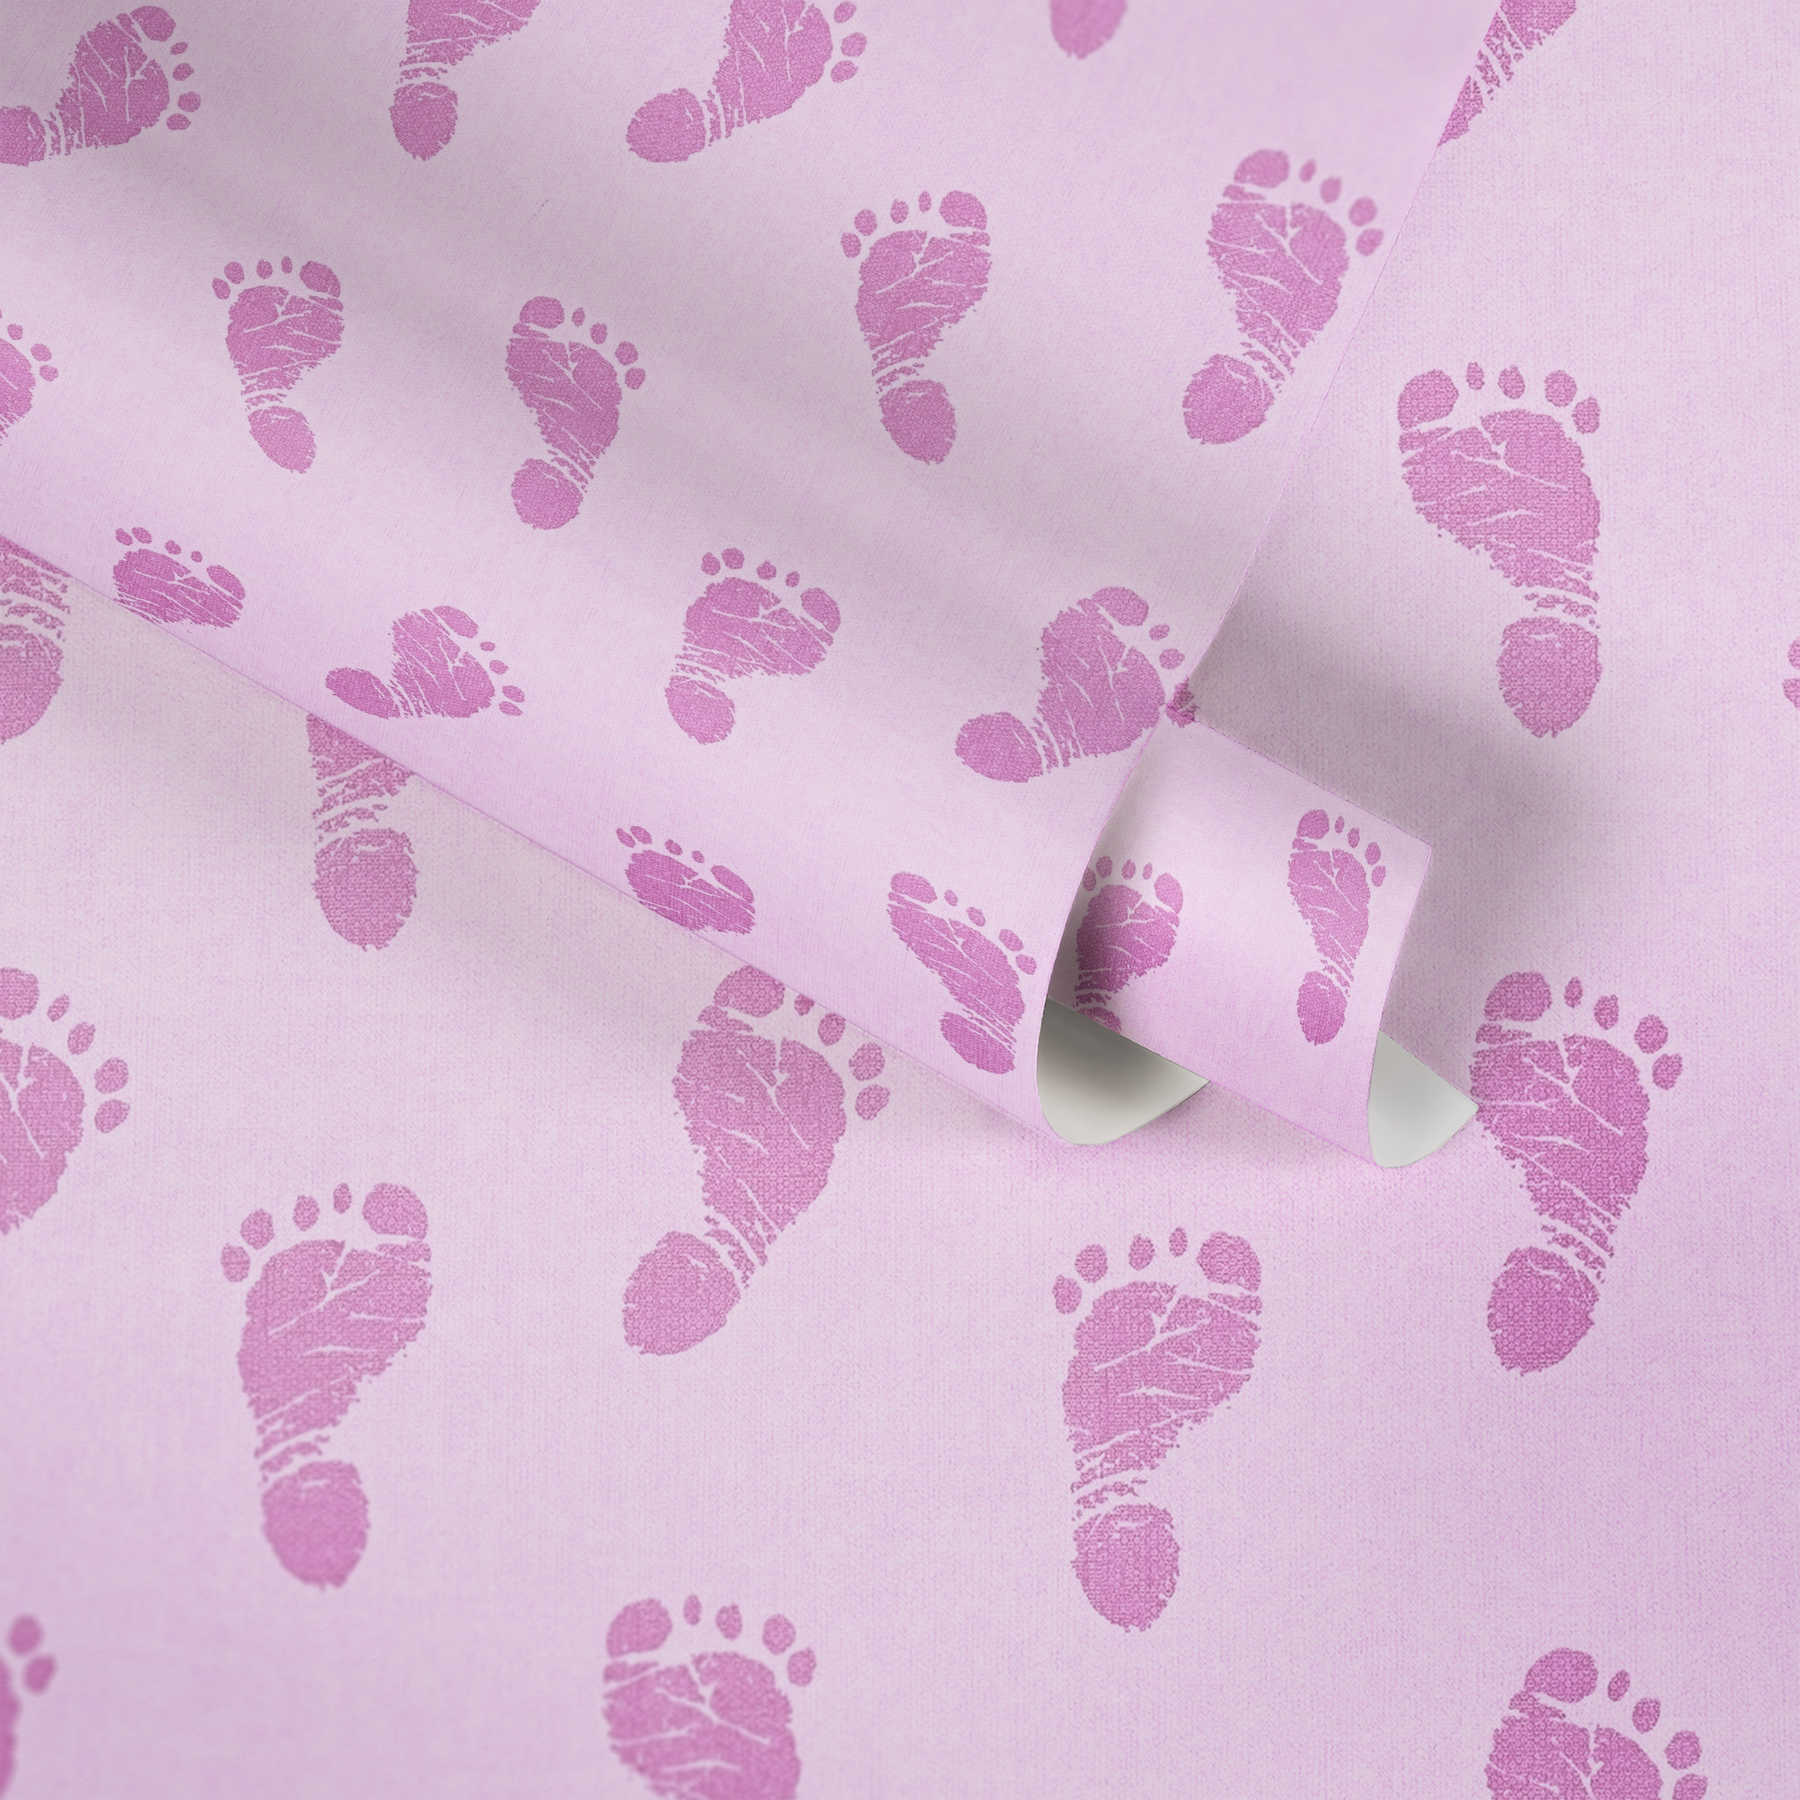             Nursery wallpaper baby design for girls - pink
        